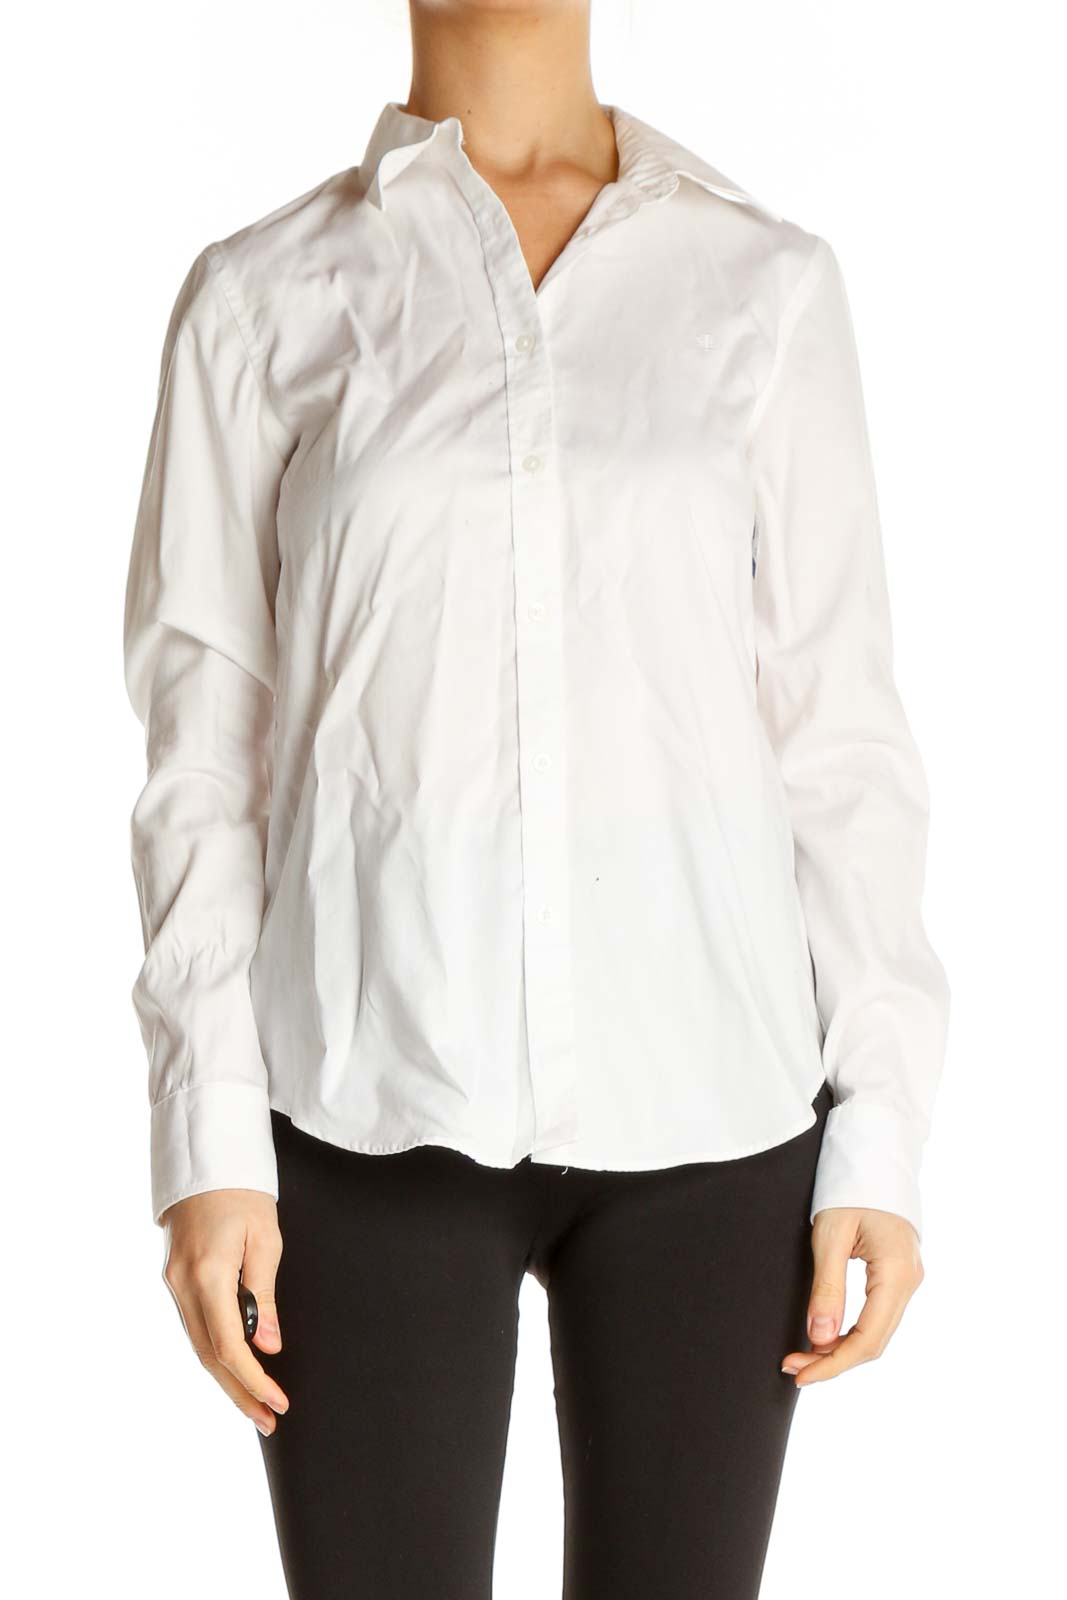 Lauren Ralph Lauren - White Solid Formal Shirt Cotton | SilkRoll